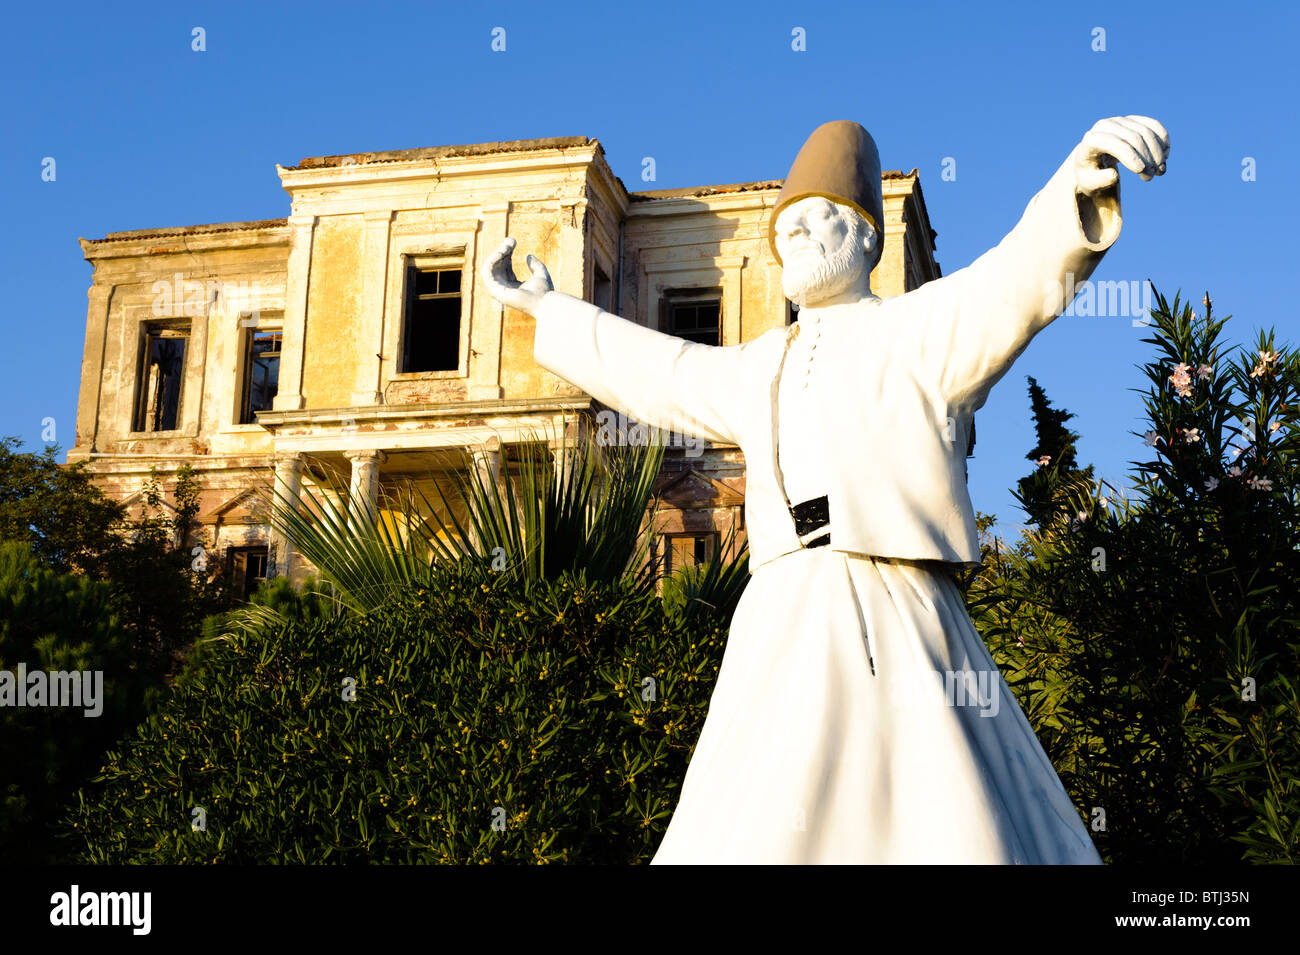 Greek house and Turkish statue, Cunda Island promenade. Stock Photo